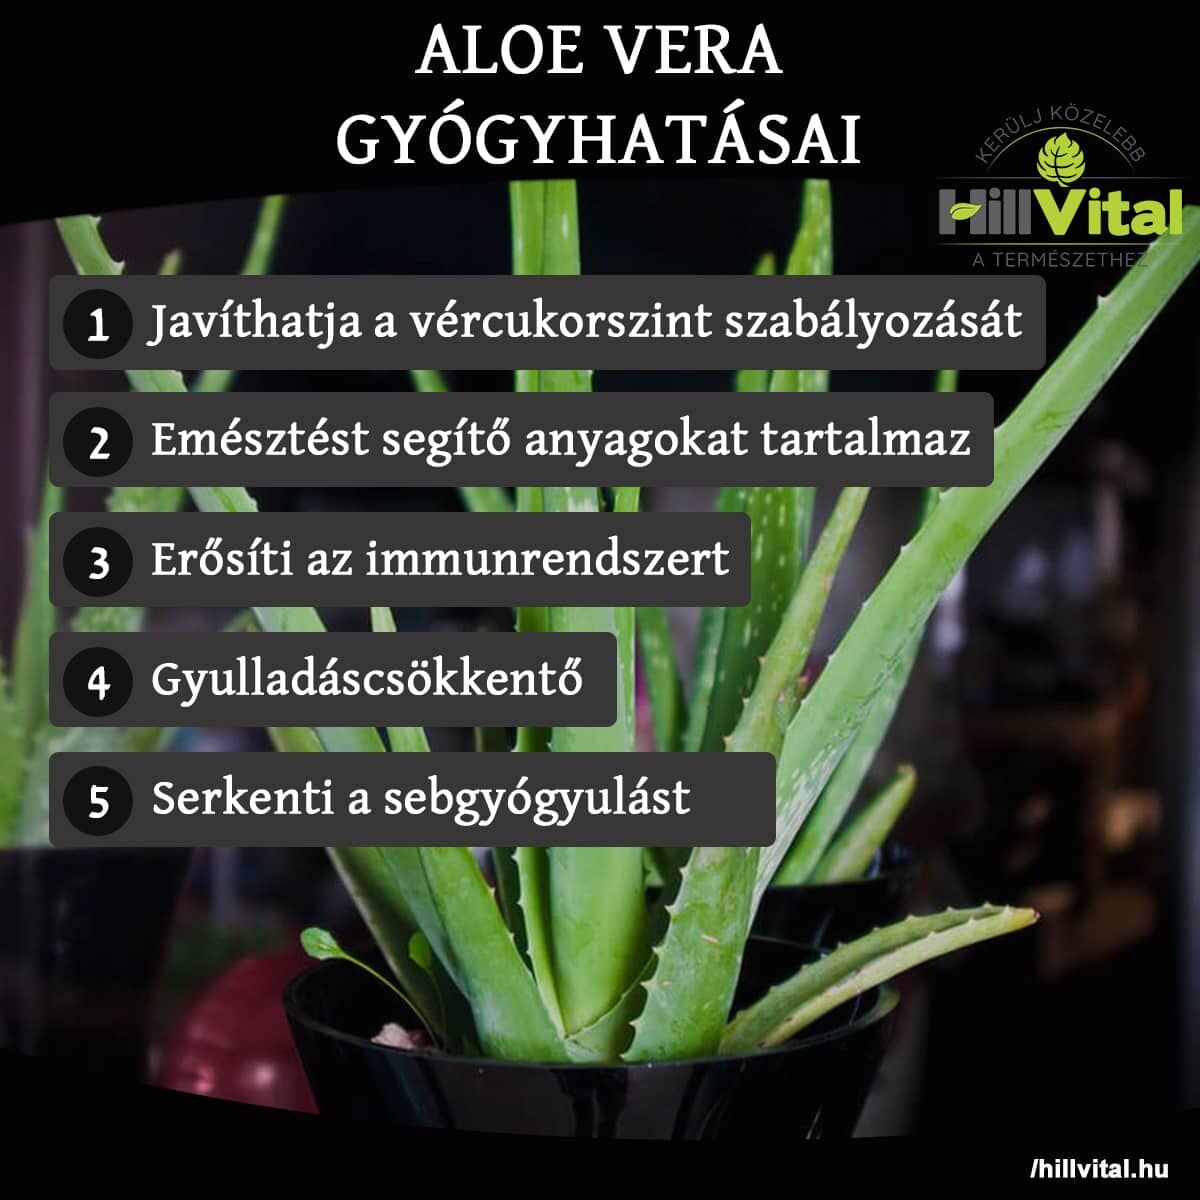 Aloe-vera-gyogyhatasai